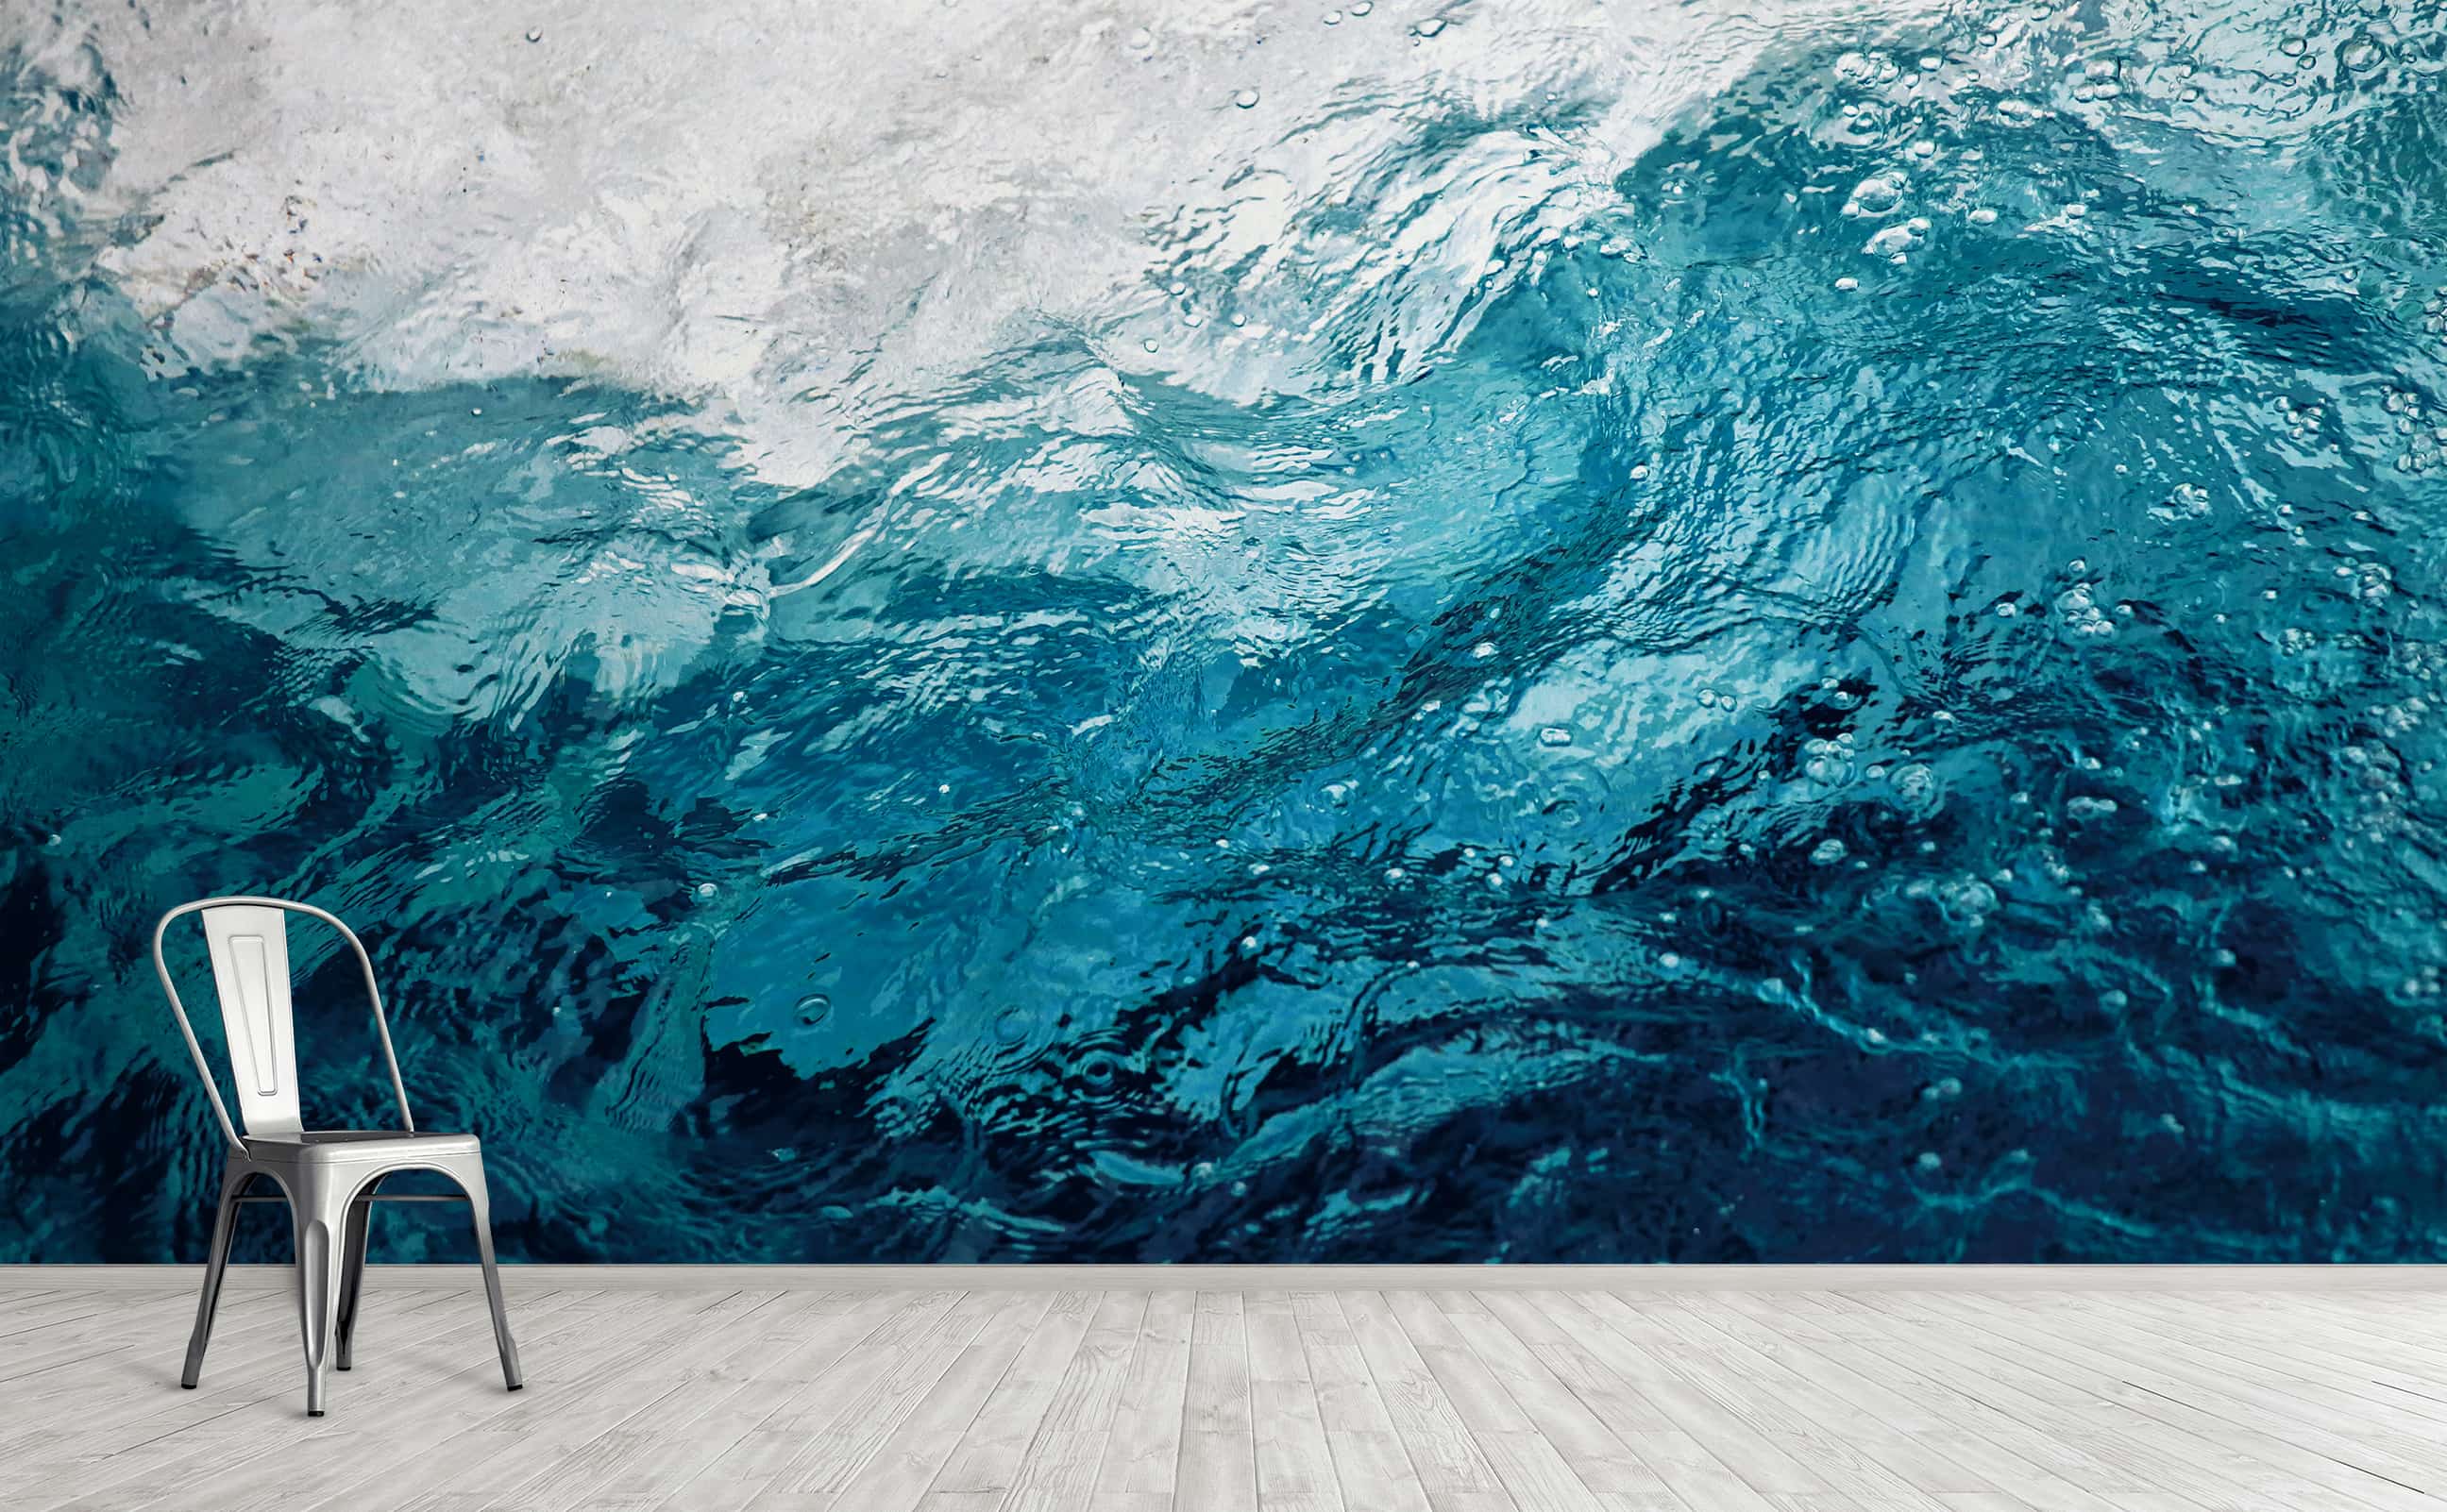 Tidal Pool Wall Mural by Walls Need Love┬«